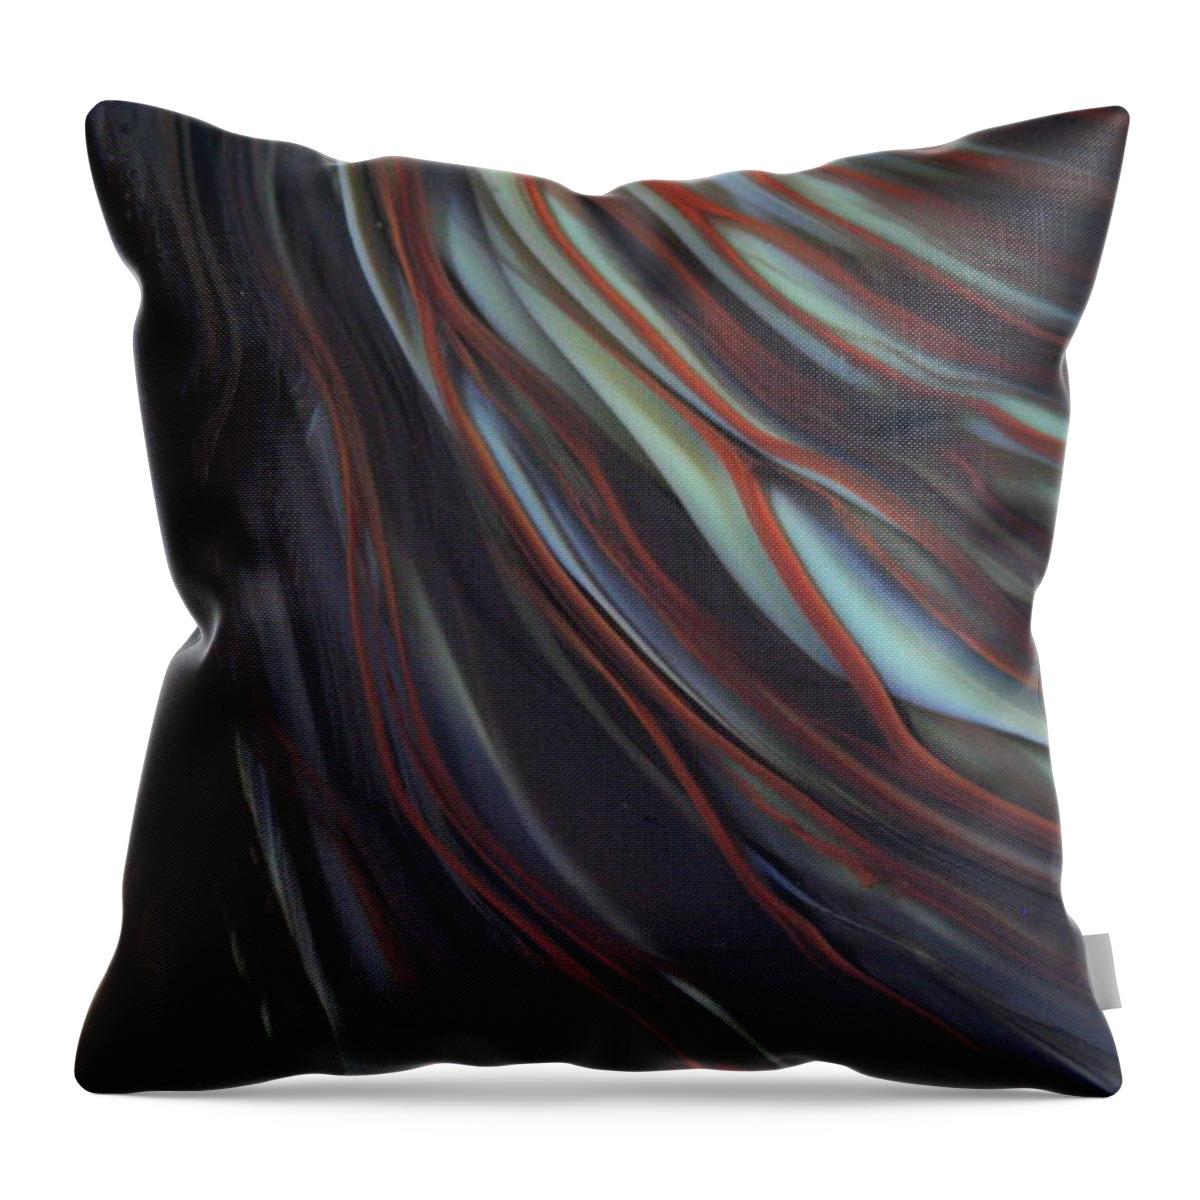 Glass Art Throw Pillow featuring the photograph Glass Veins by Kimberly Lyon